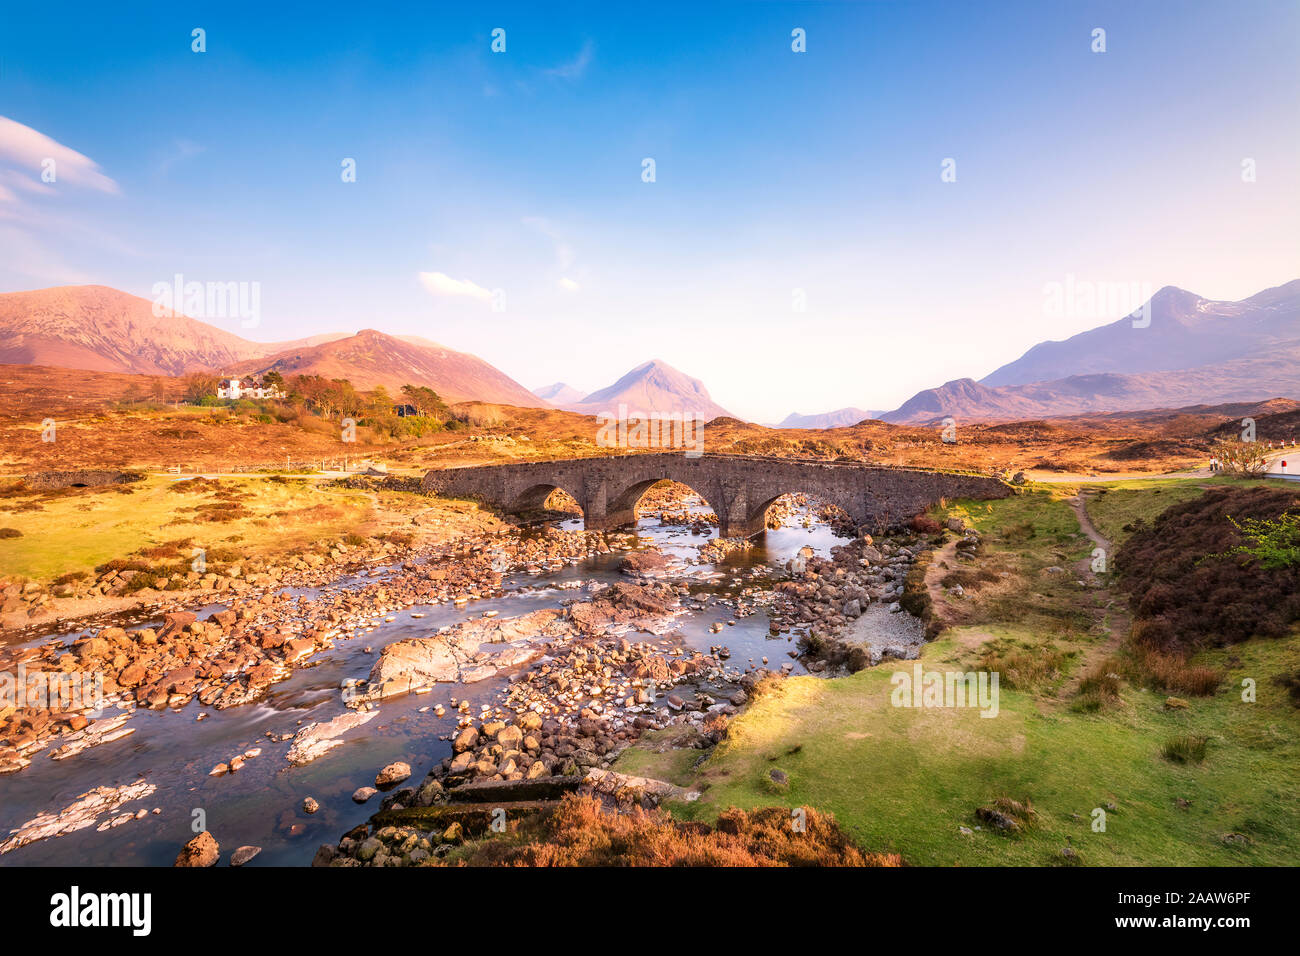 Sligachan Bridge with Cuillin mountains in background, Scottish Highlands, Scotland, UK Stock Photo